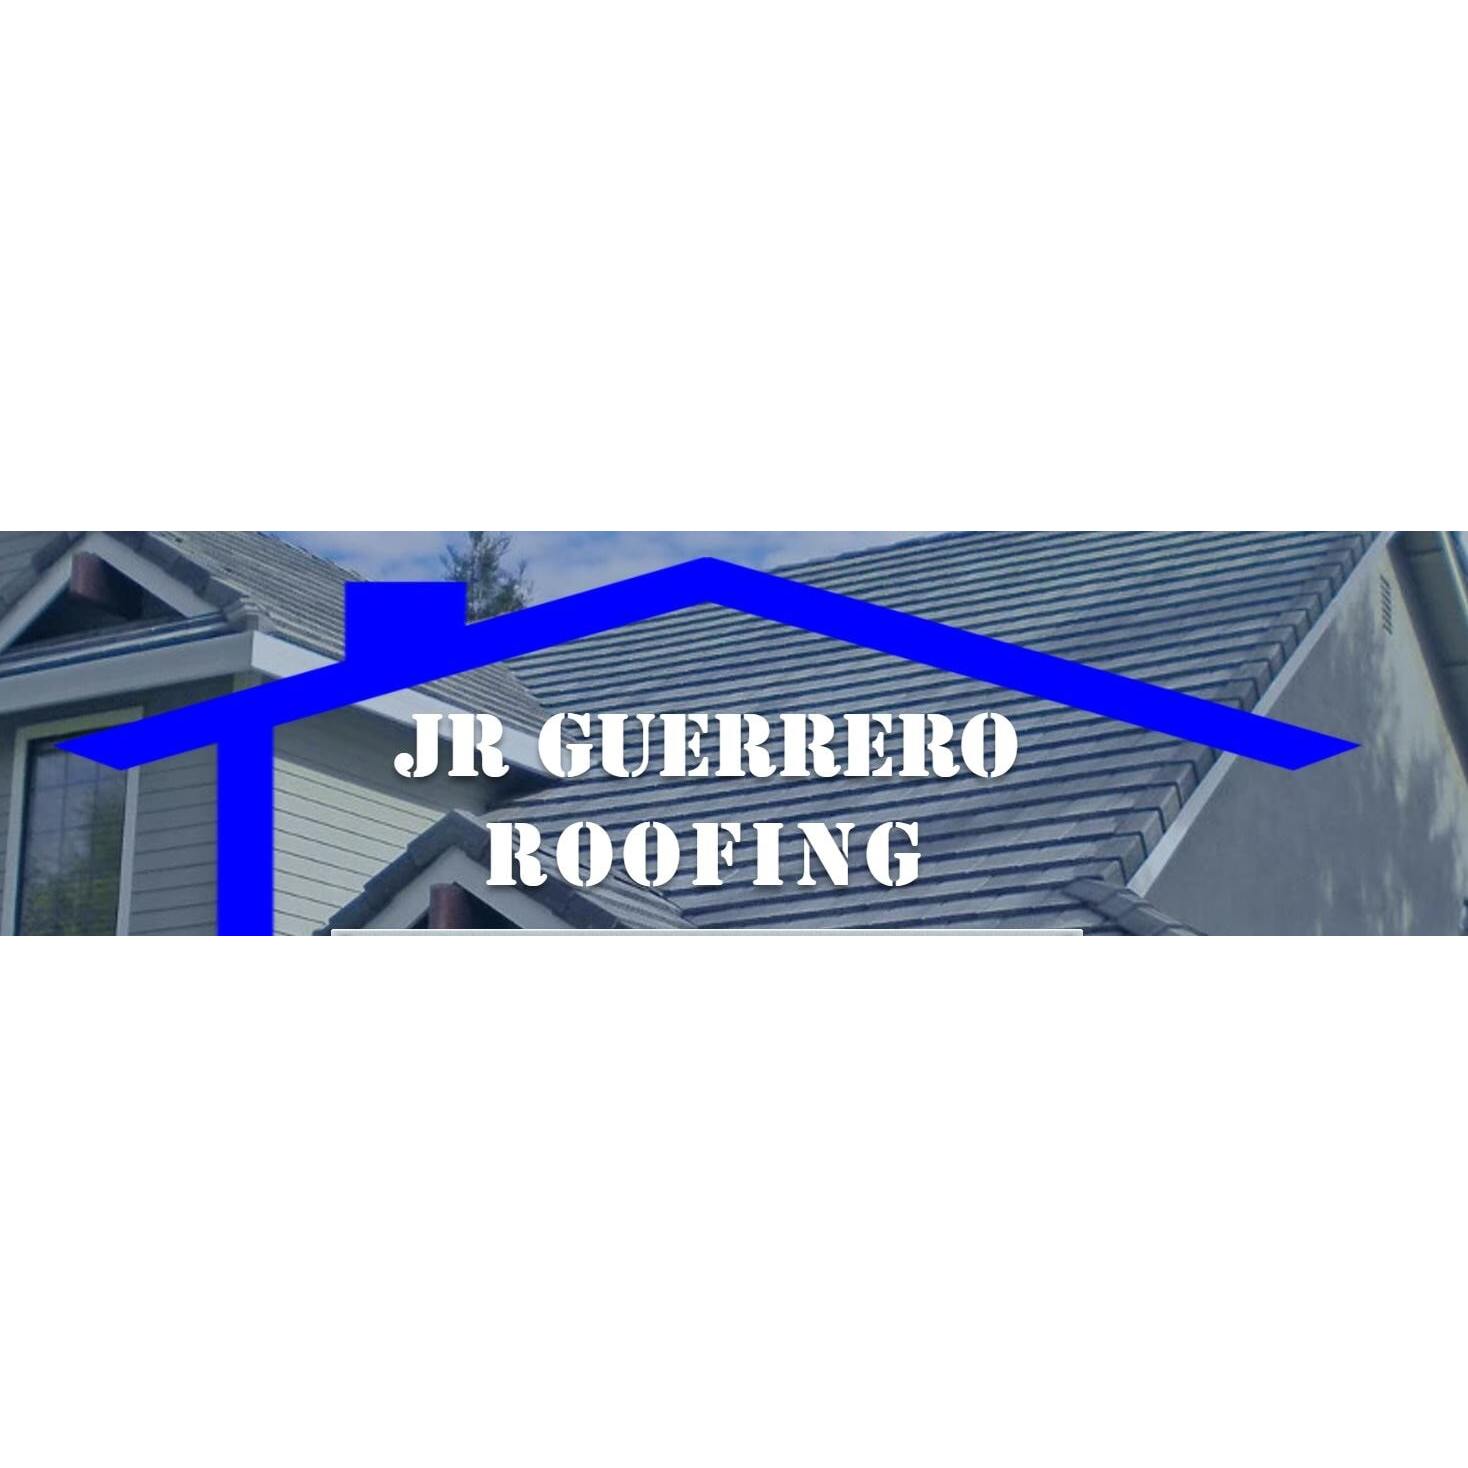 Jr Guerrero Roofing Co. - San Antonio, TX - (210)432-3516 | ShowMeLocal.com